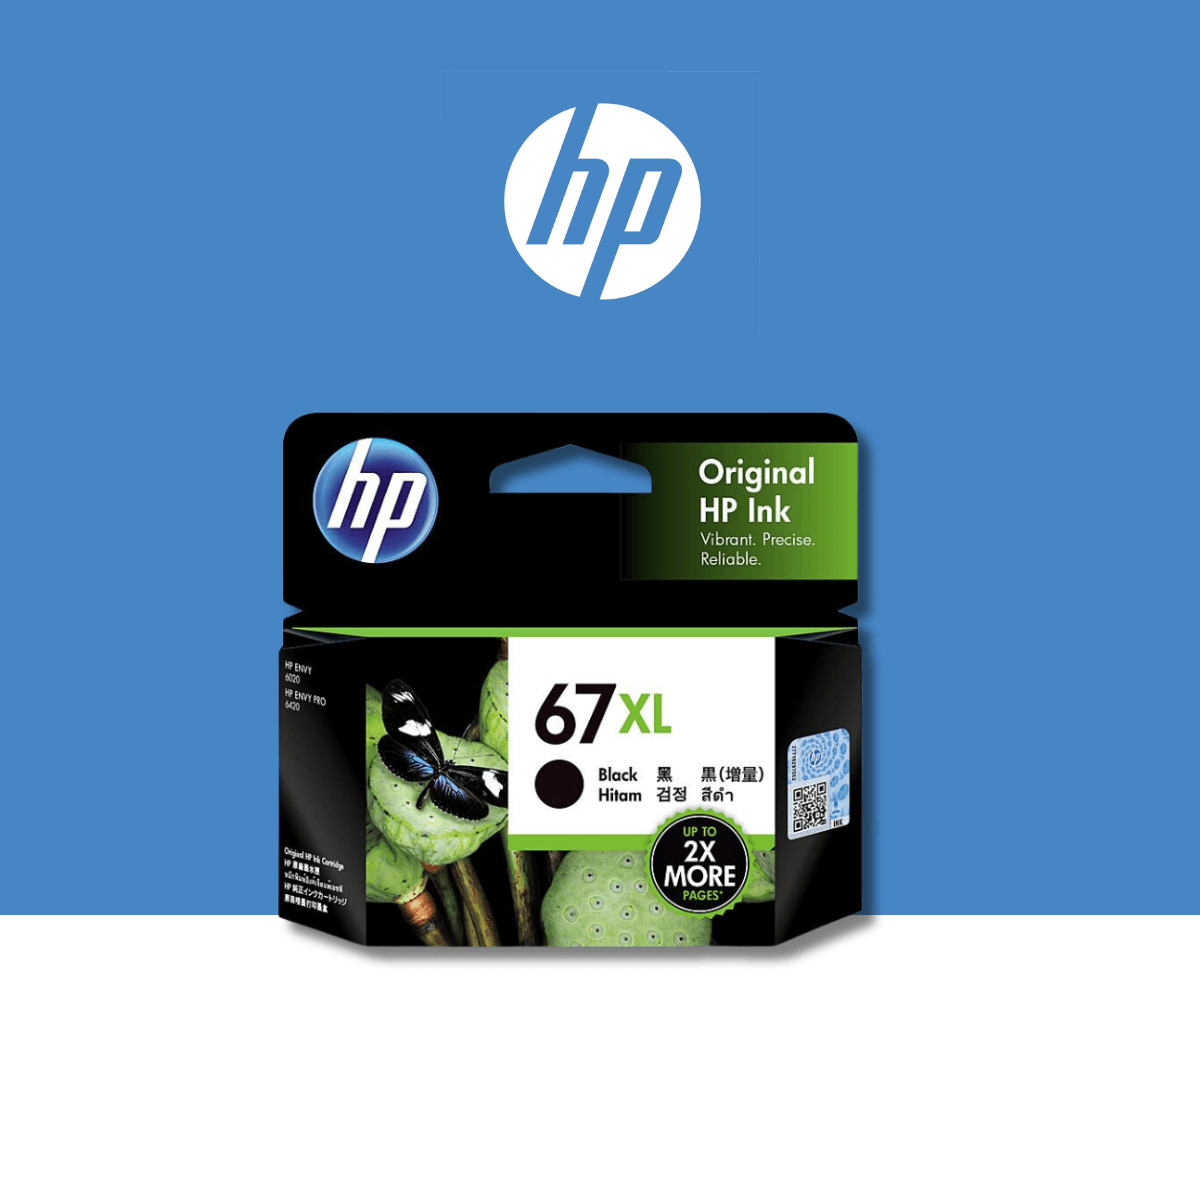 Shop our popular HP ink cartridges